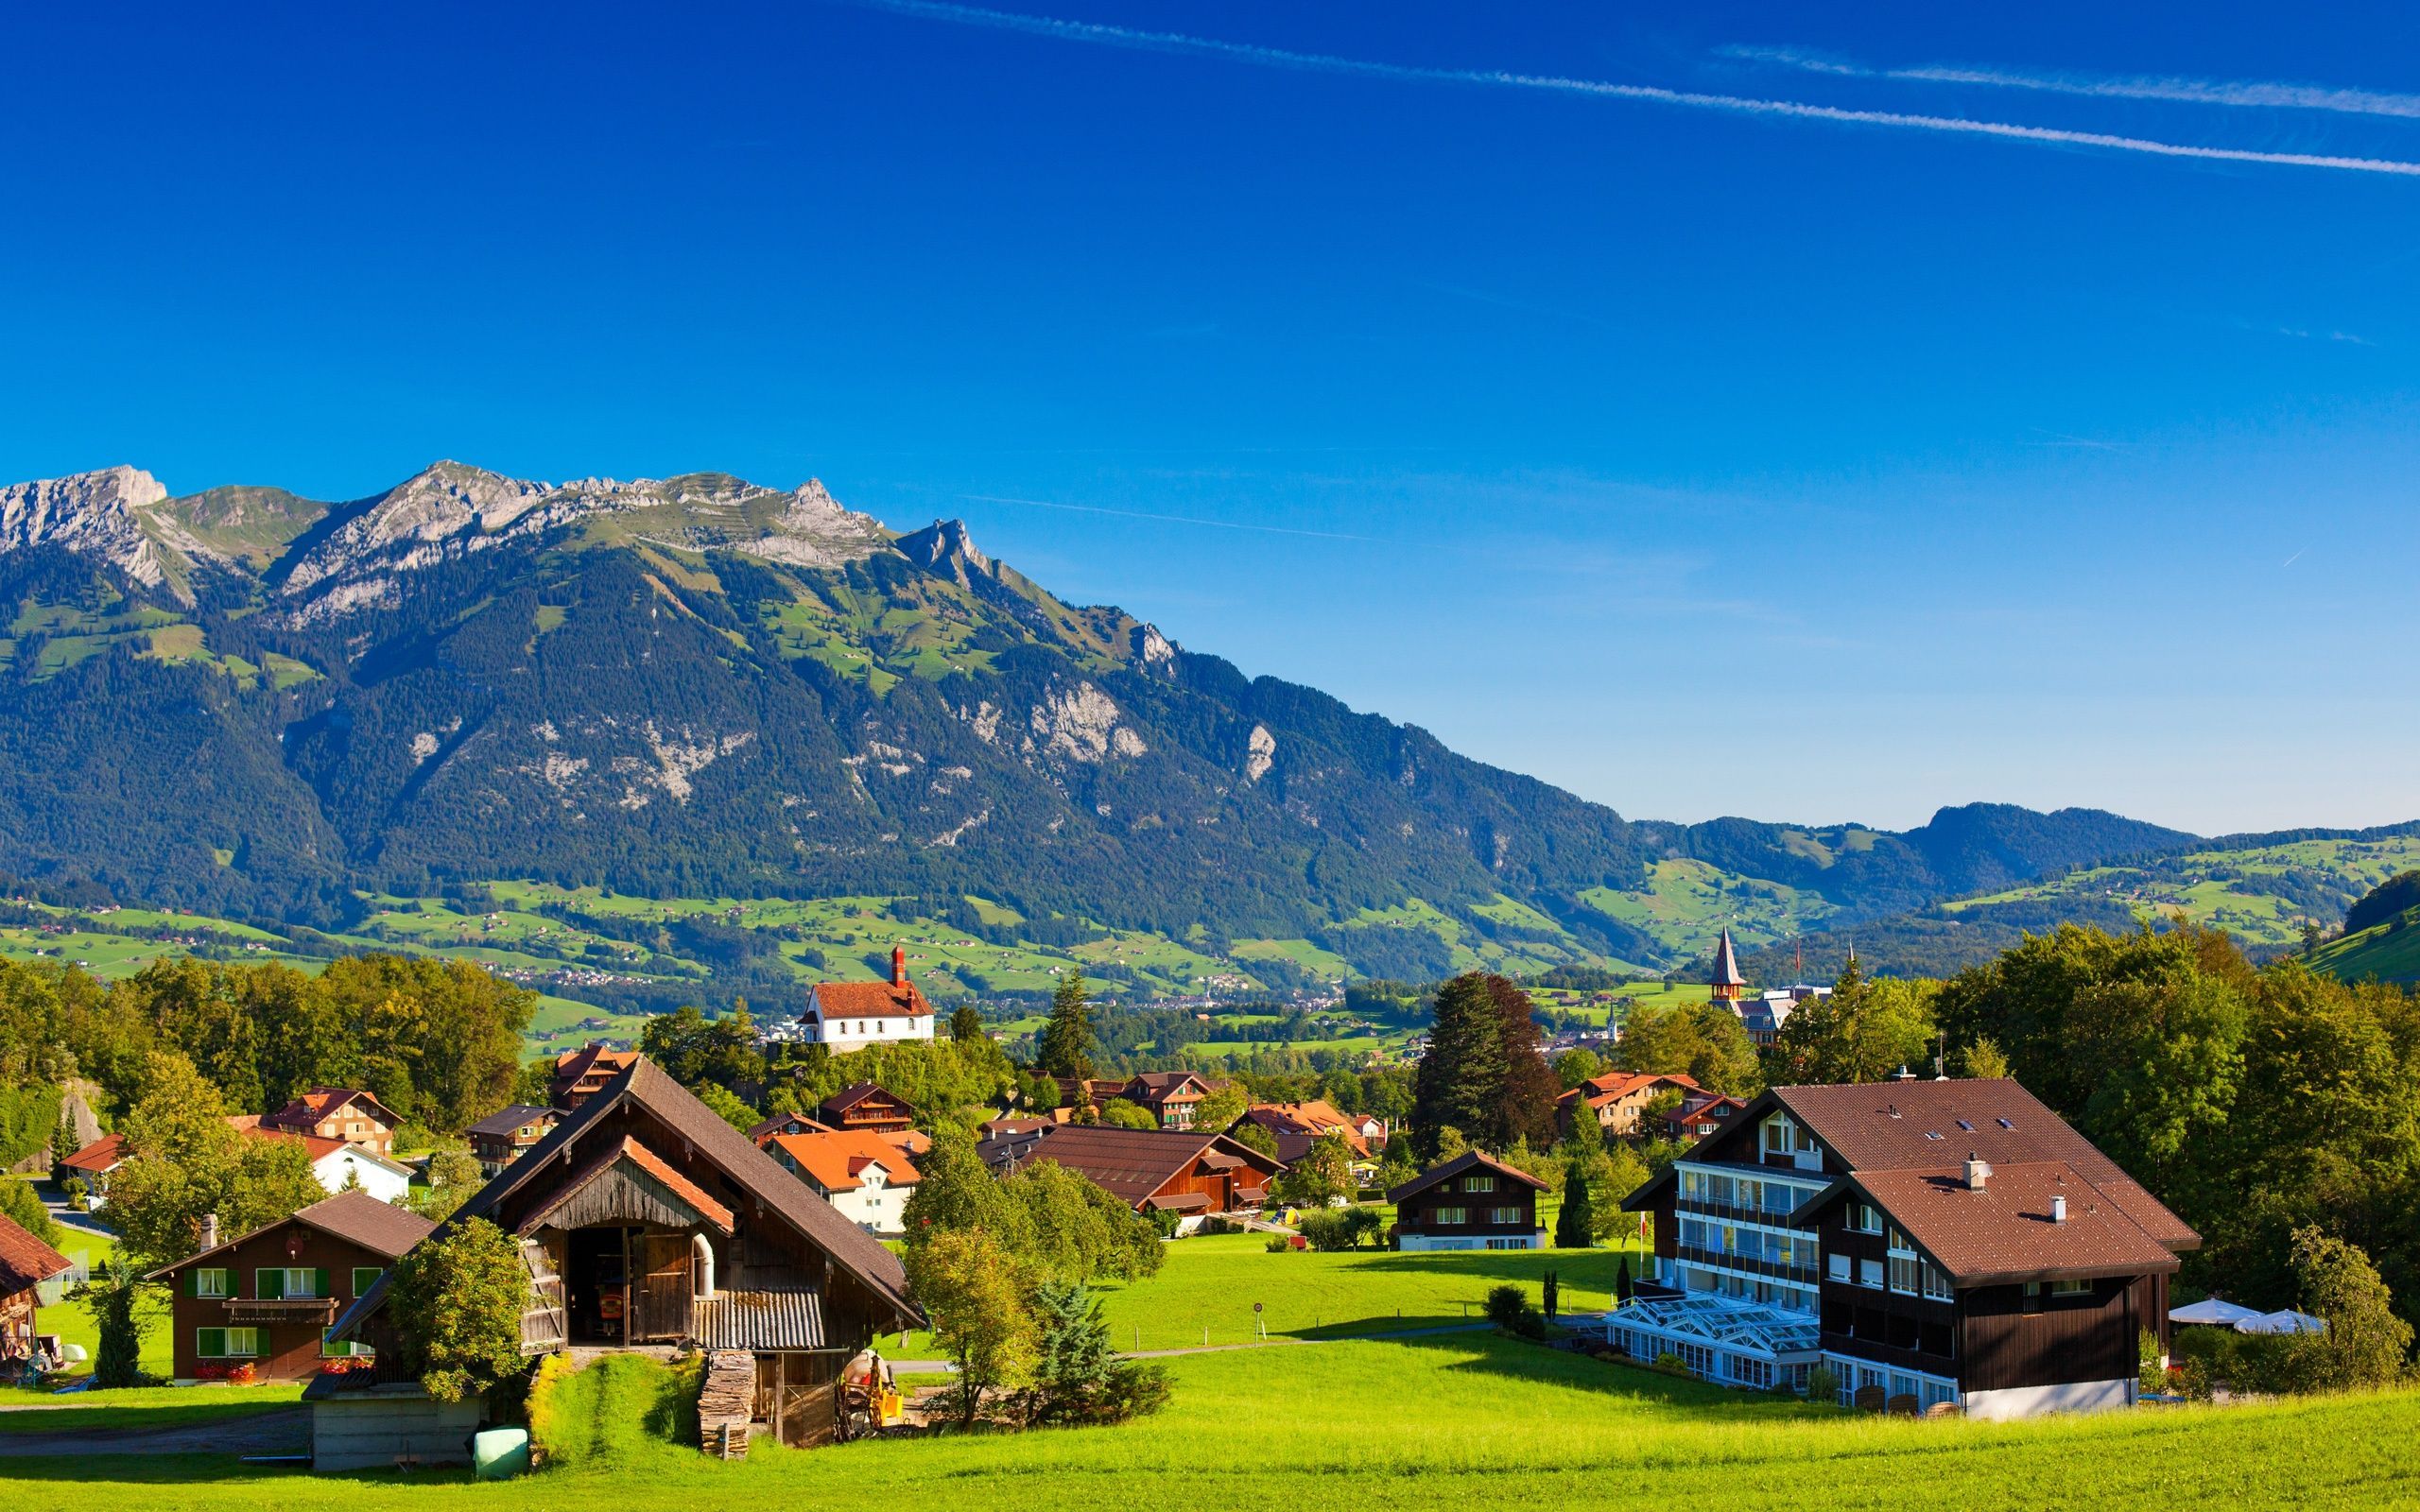 Switzerland, Alps, mountains, summer, nature, greenery, houses